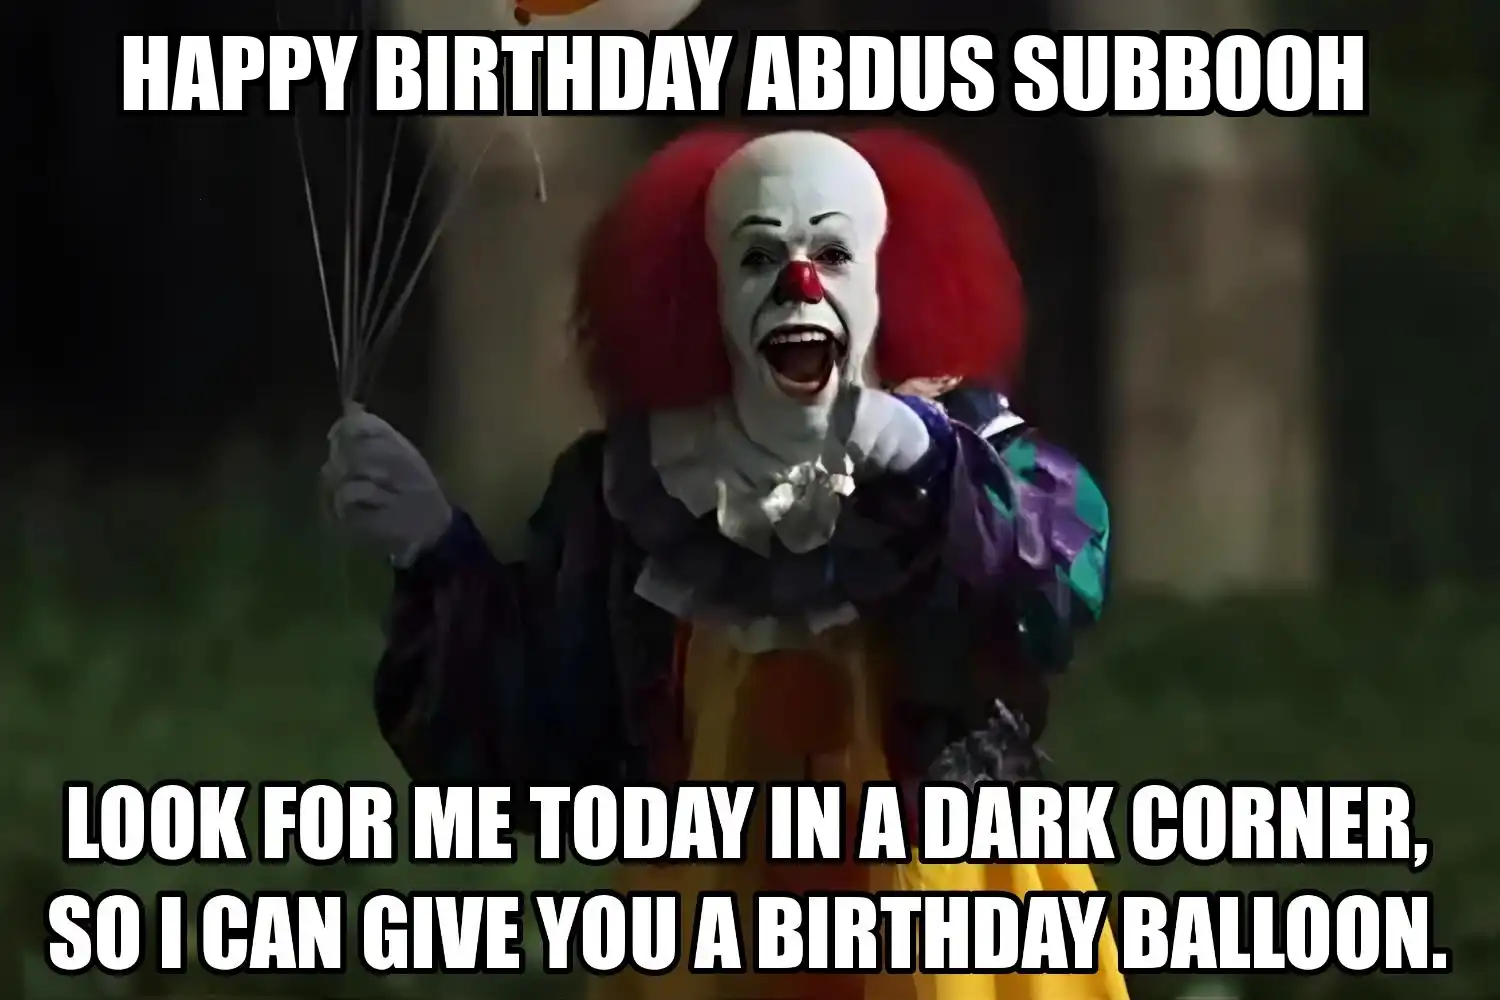 Happy Birthday Abdus Subbooh I Can Give You A Balloon Meme